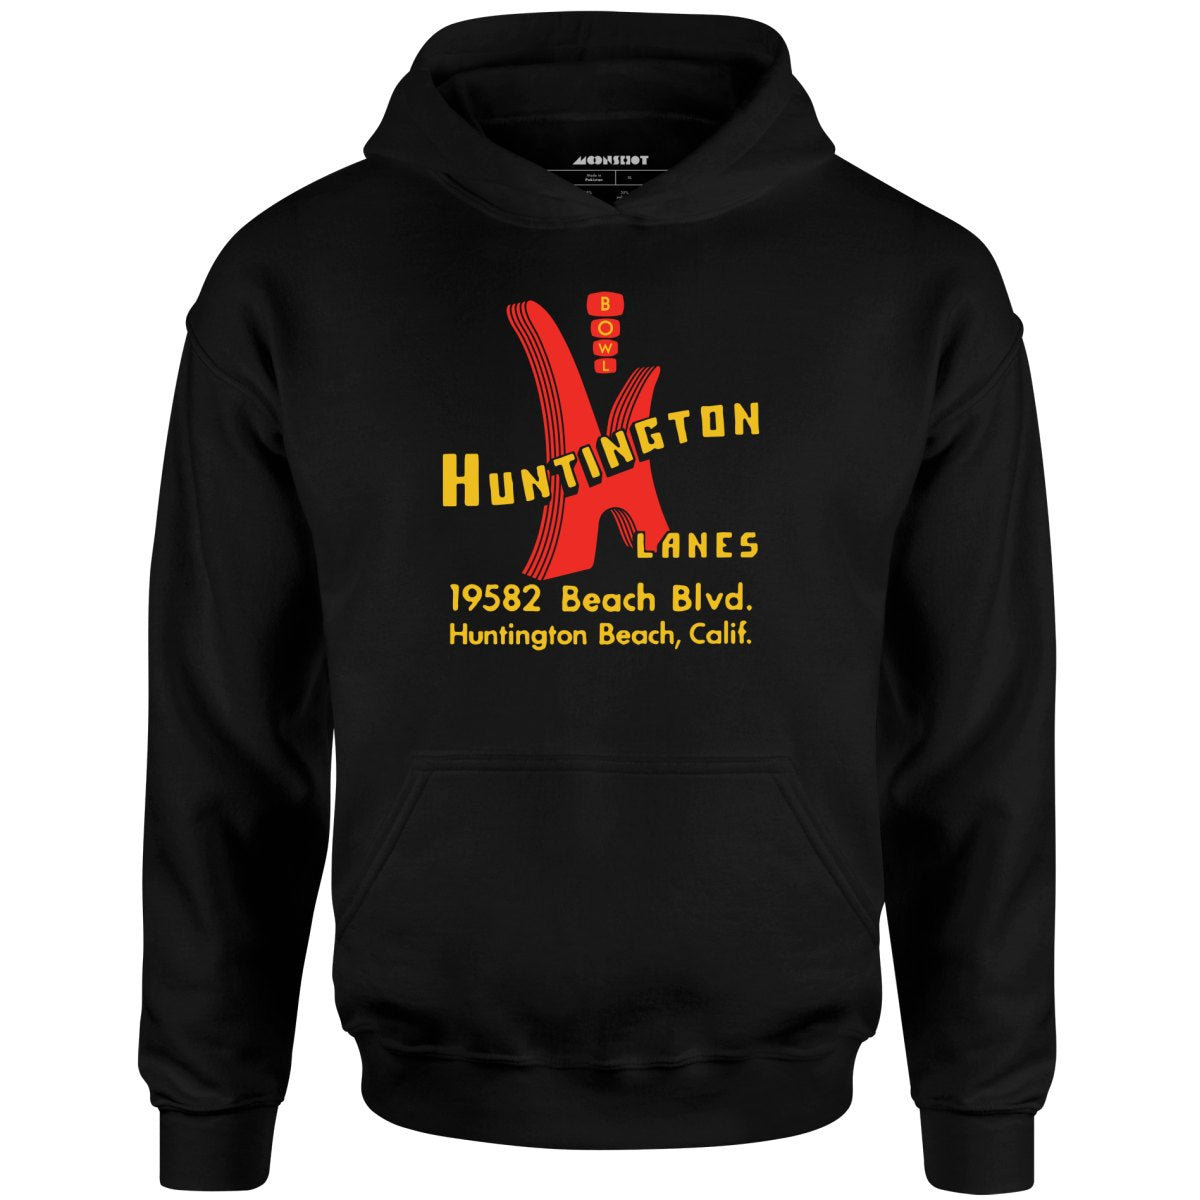 Huntington Lanes - Huntington Beach, CA - Vintage Bowling Alley - Unisex Hoodie